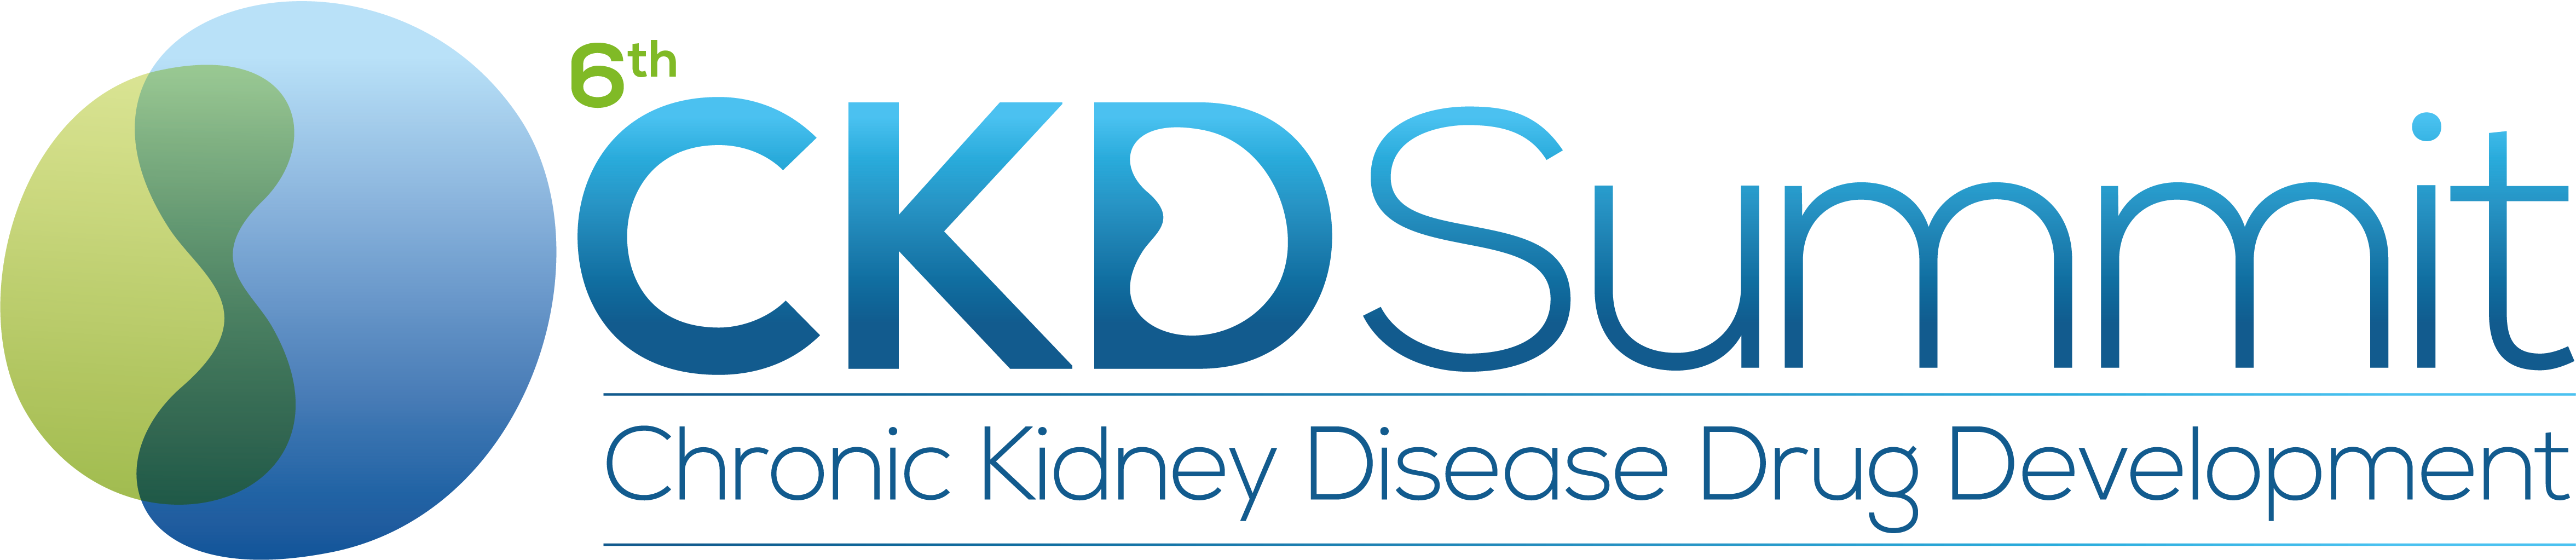 6th CKD Drug Development Summit Logo